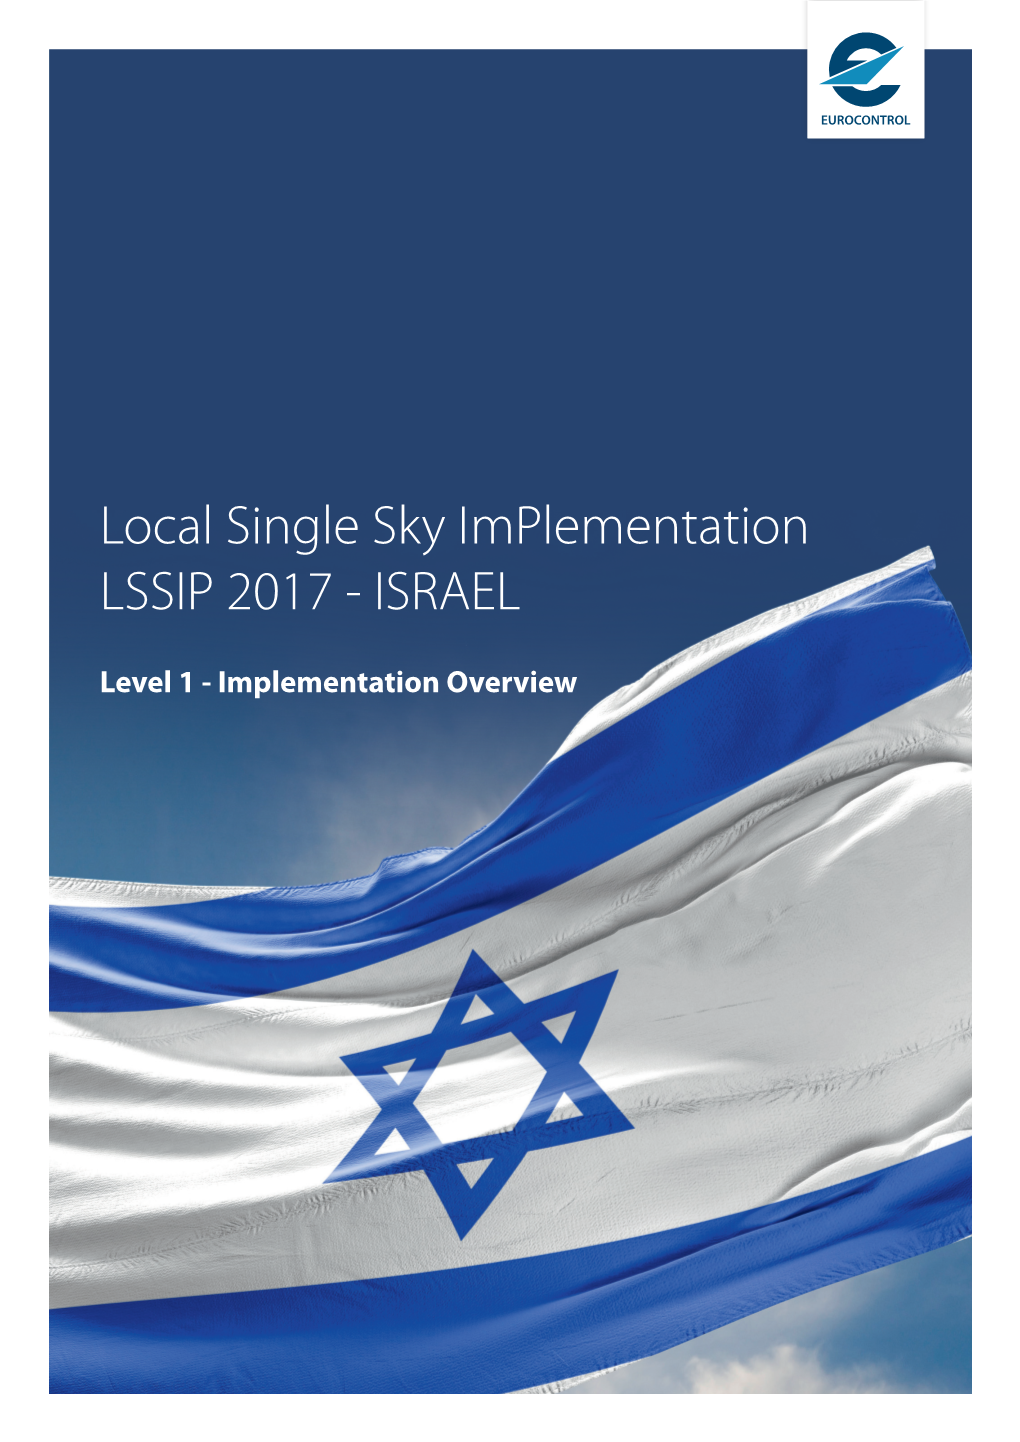 Local Single Sky Implementation LSSIP 2017 - ISRAEL